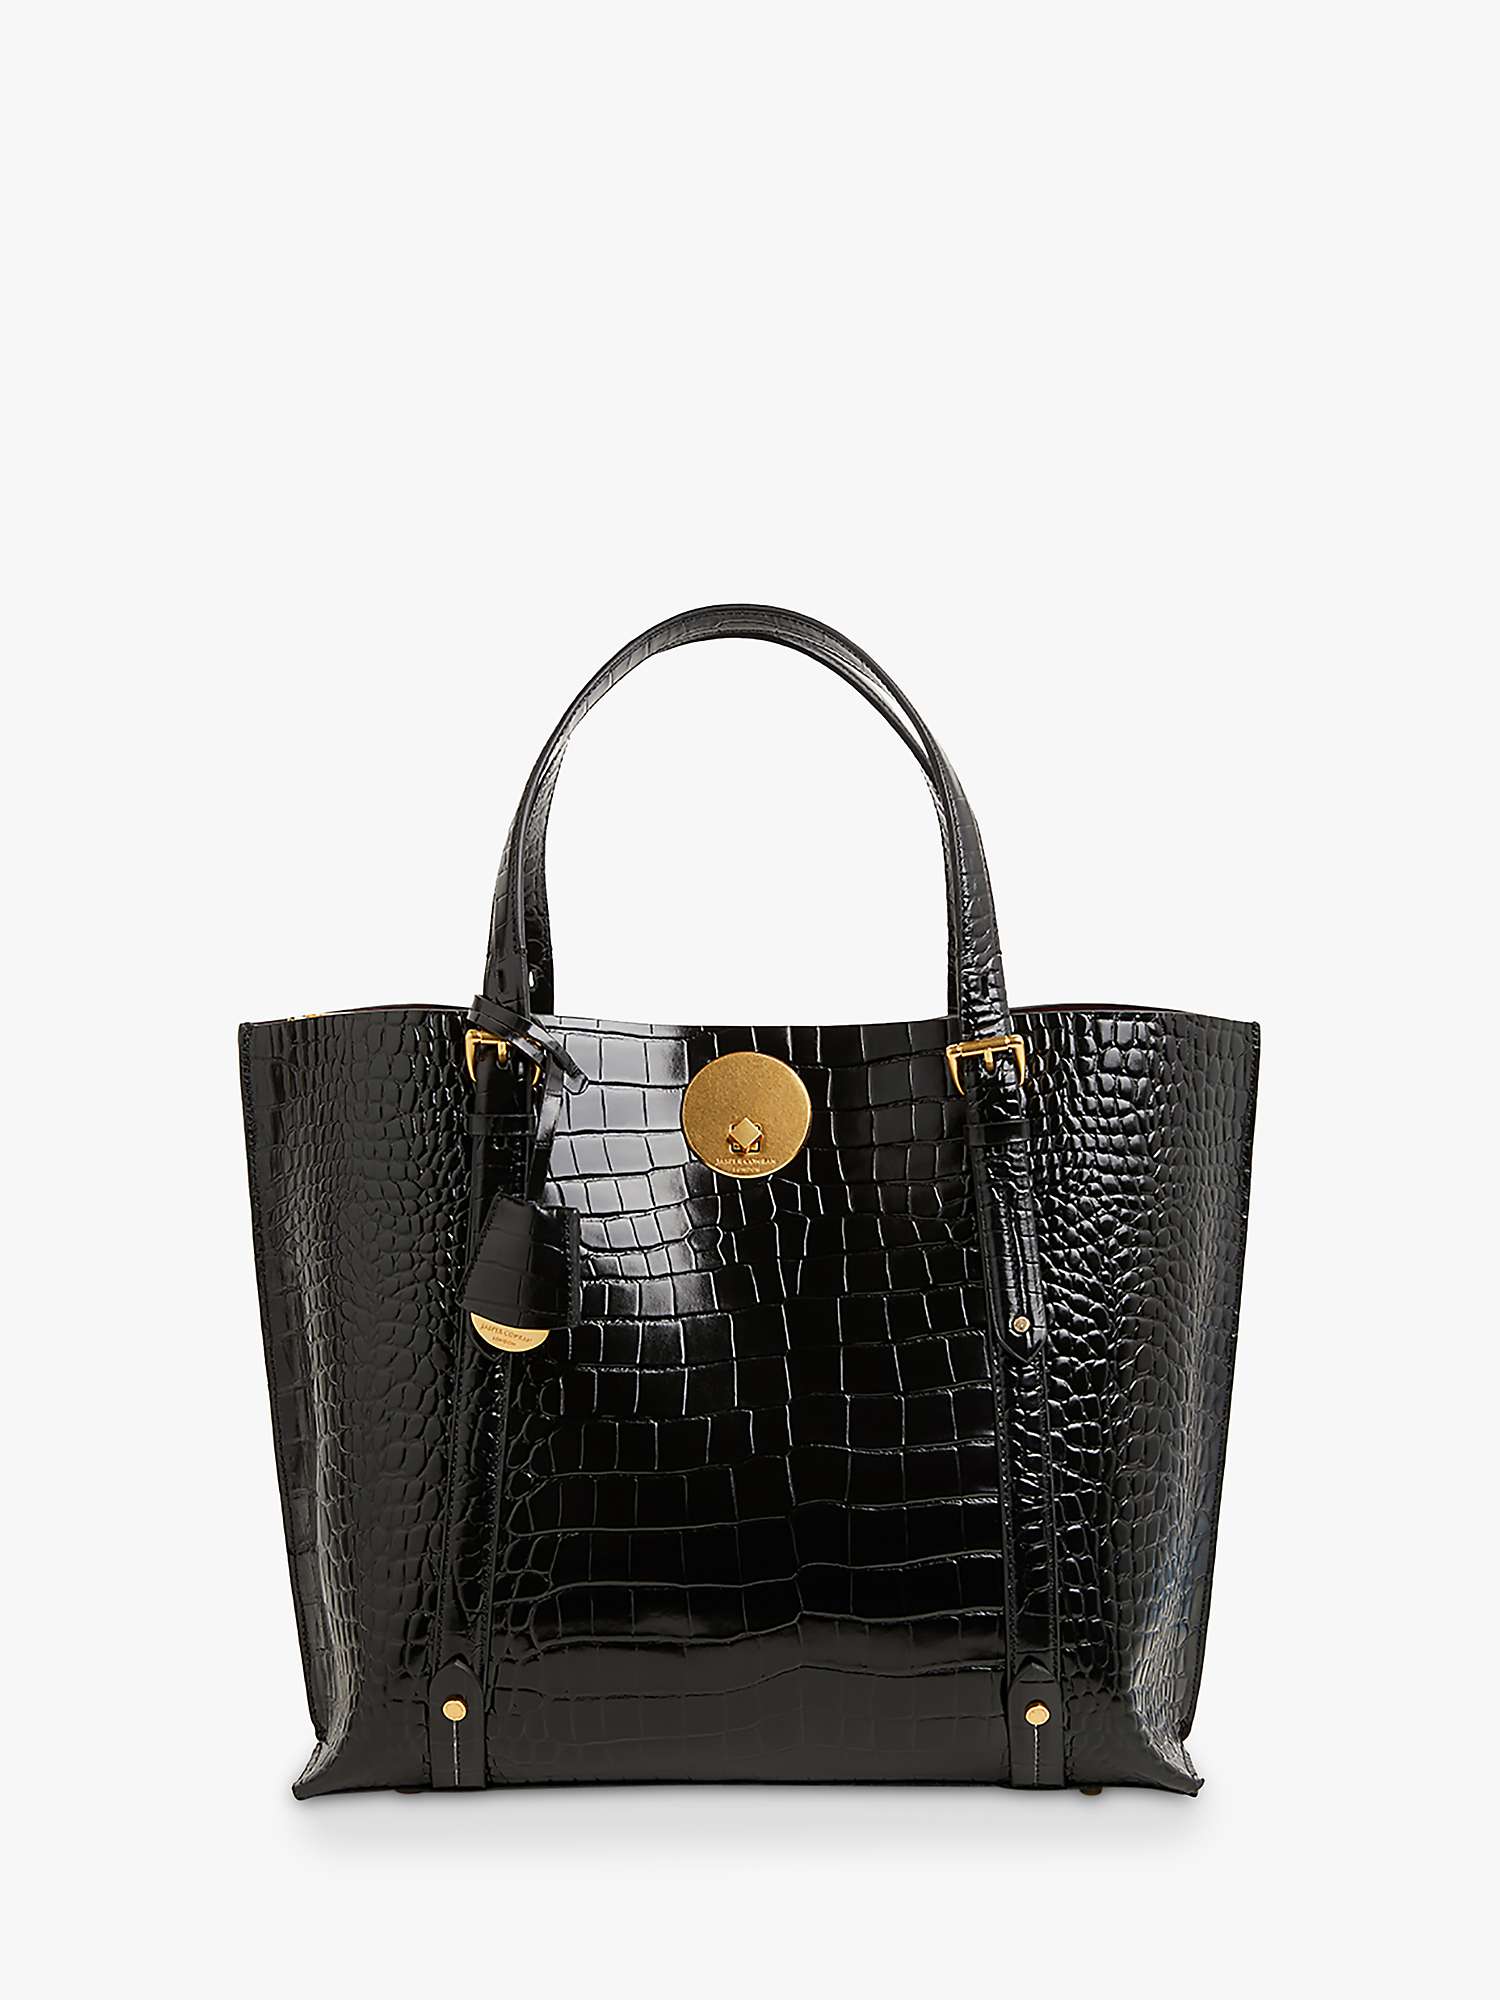 Buy Jasper Conran London Alexis Croc Leather Grab Tote Bag Online at johnlewis.com